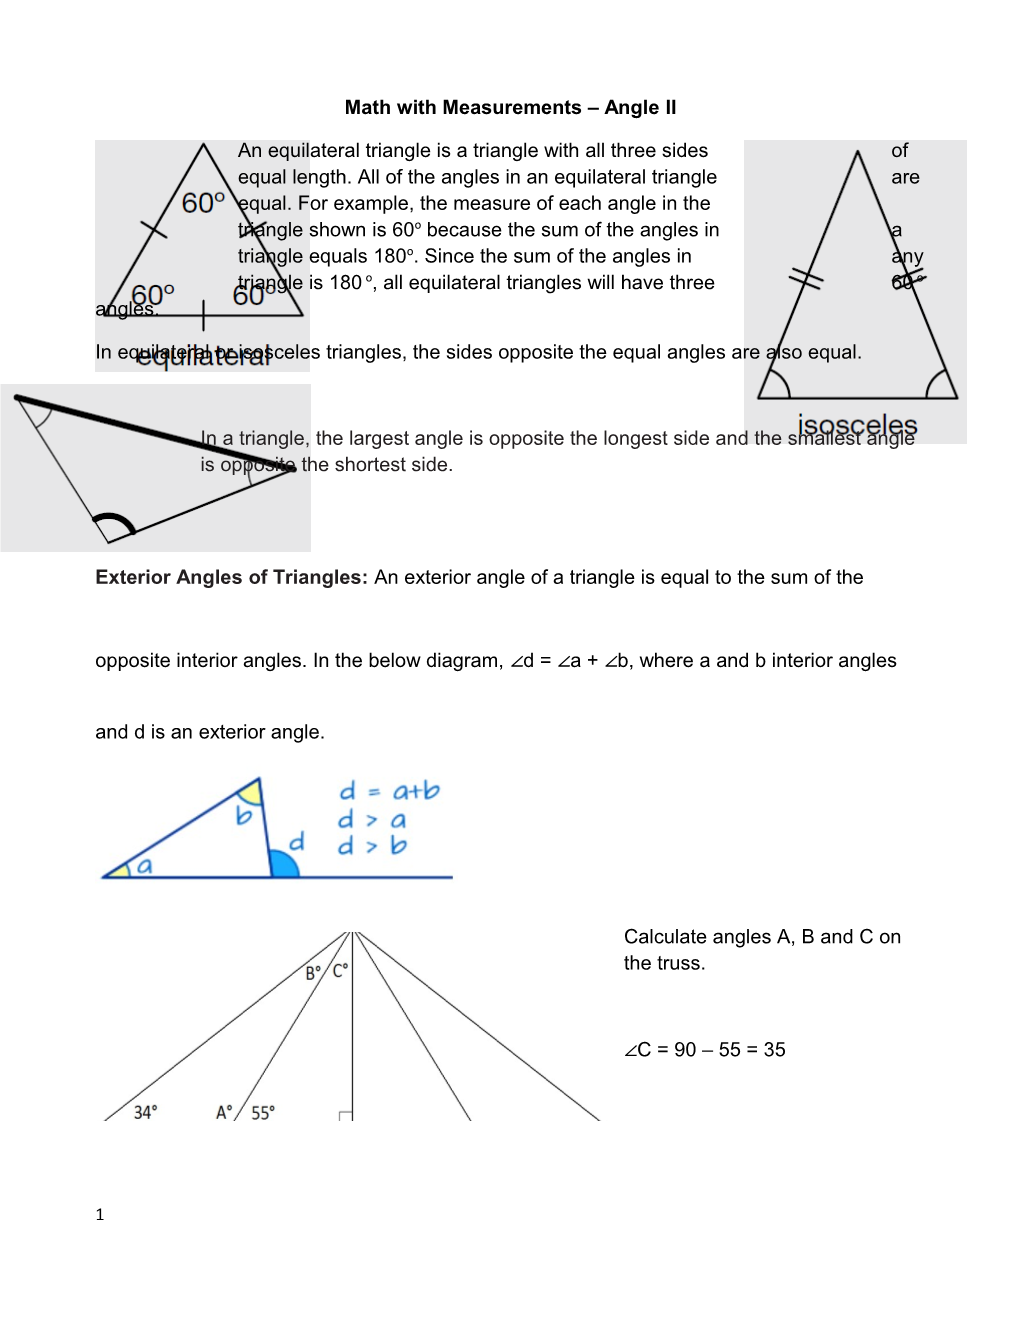 Math with Measurements Angle II